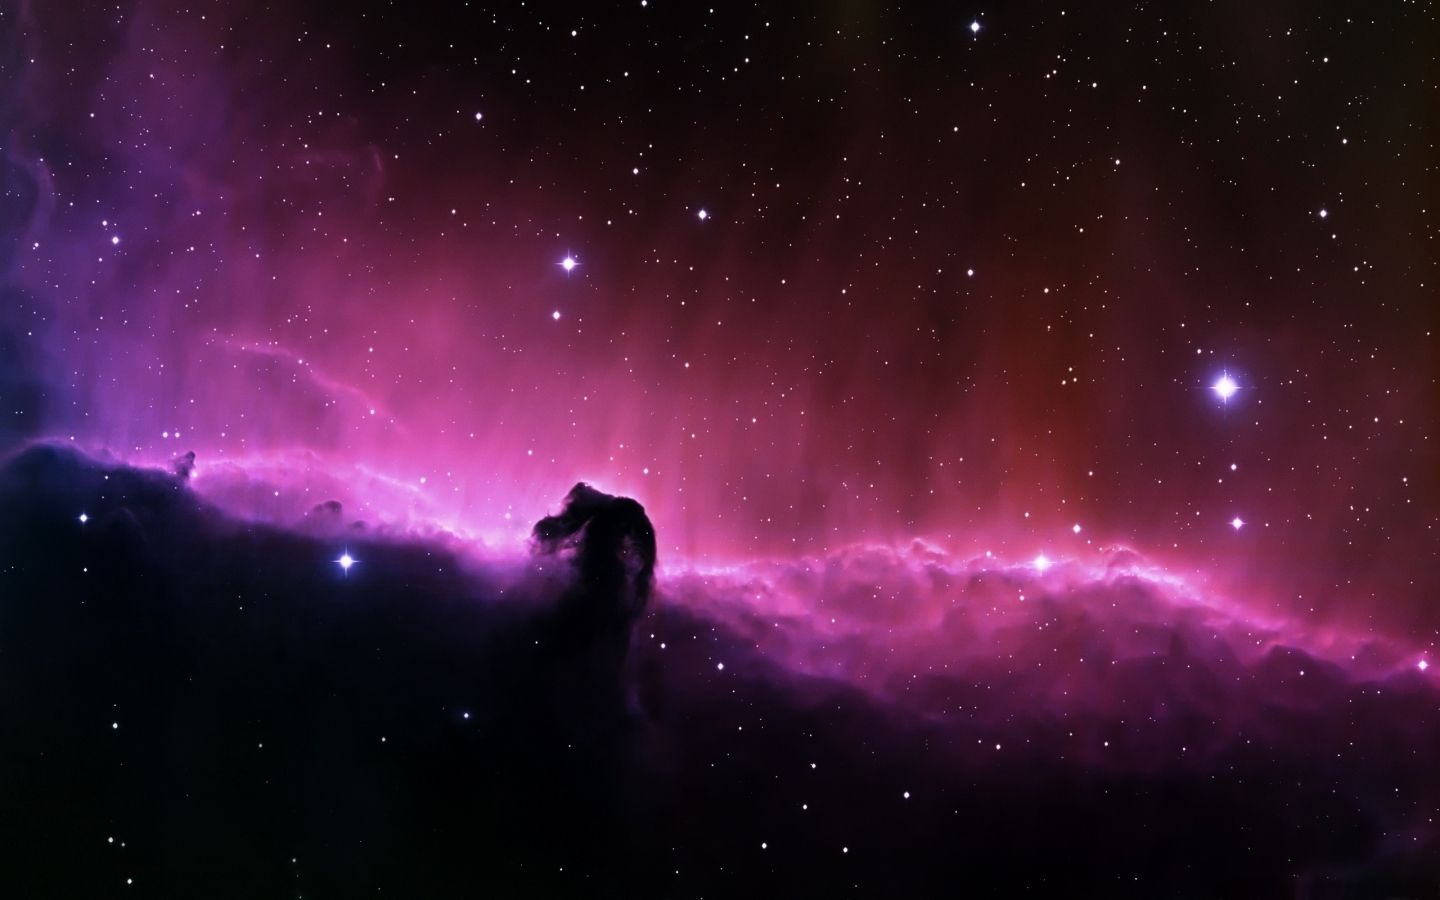 Horsehead Nebula Mac Wallpaper Download | Free Mac Wallpapers Download